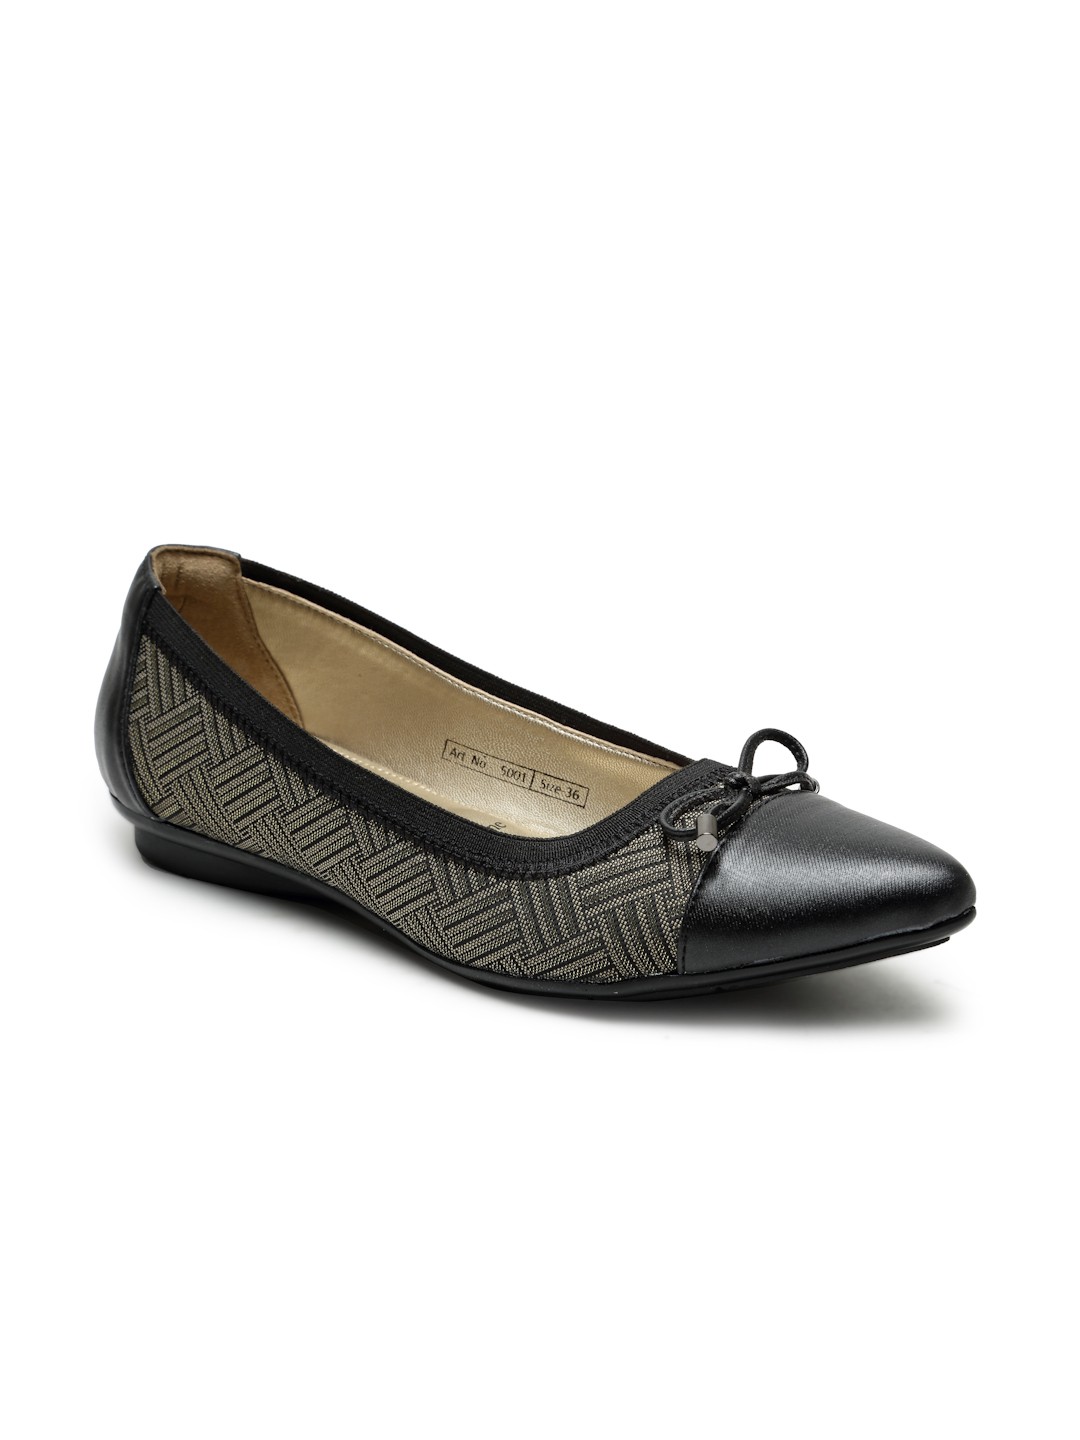 Buy Von Wellx Germany Comfort Women's Black Casual Shoes Lisa Online in Kolkata